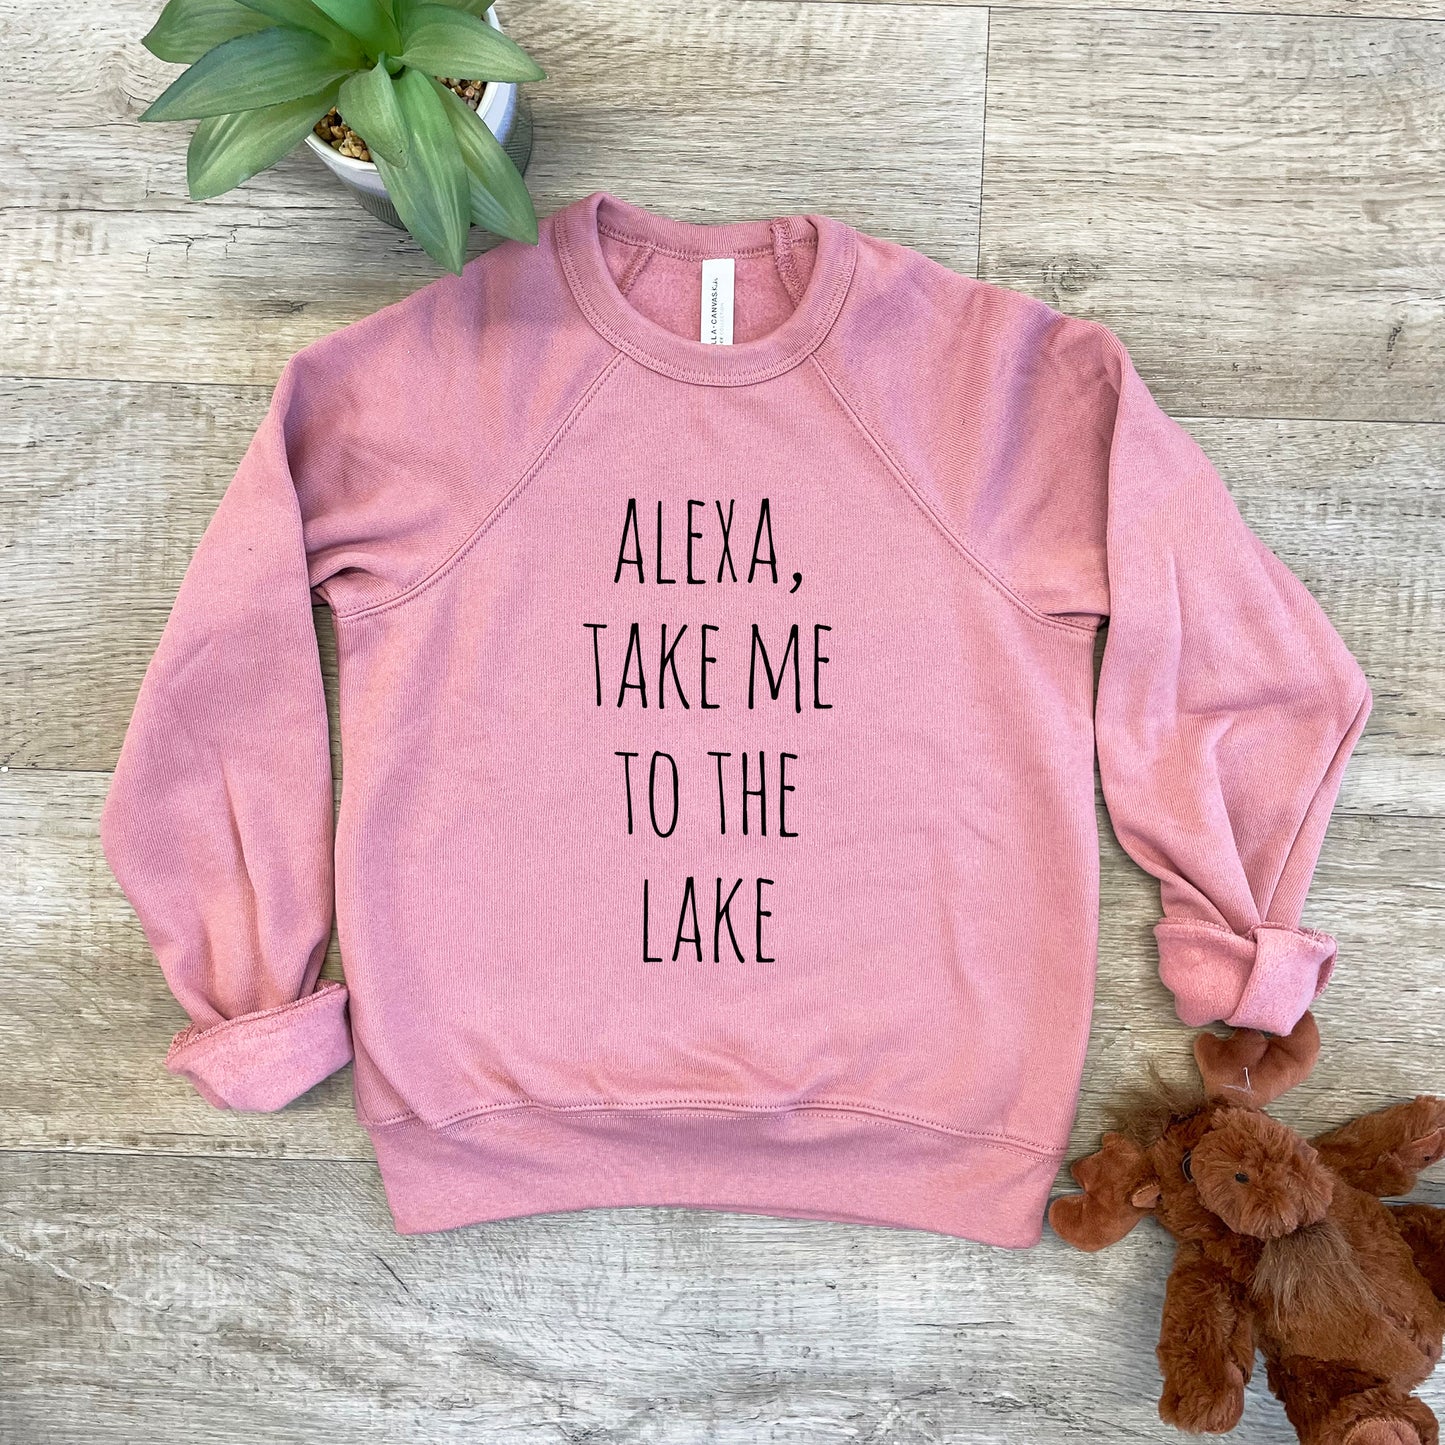 Alexa, Take Me To The Lake - Kid's Sweatshirt - Athletic Heather or Mauve